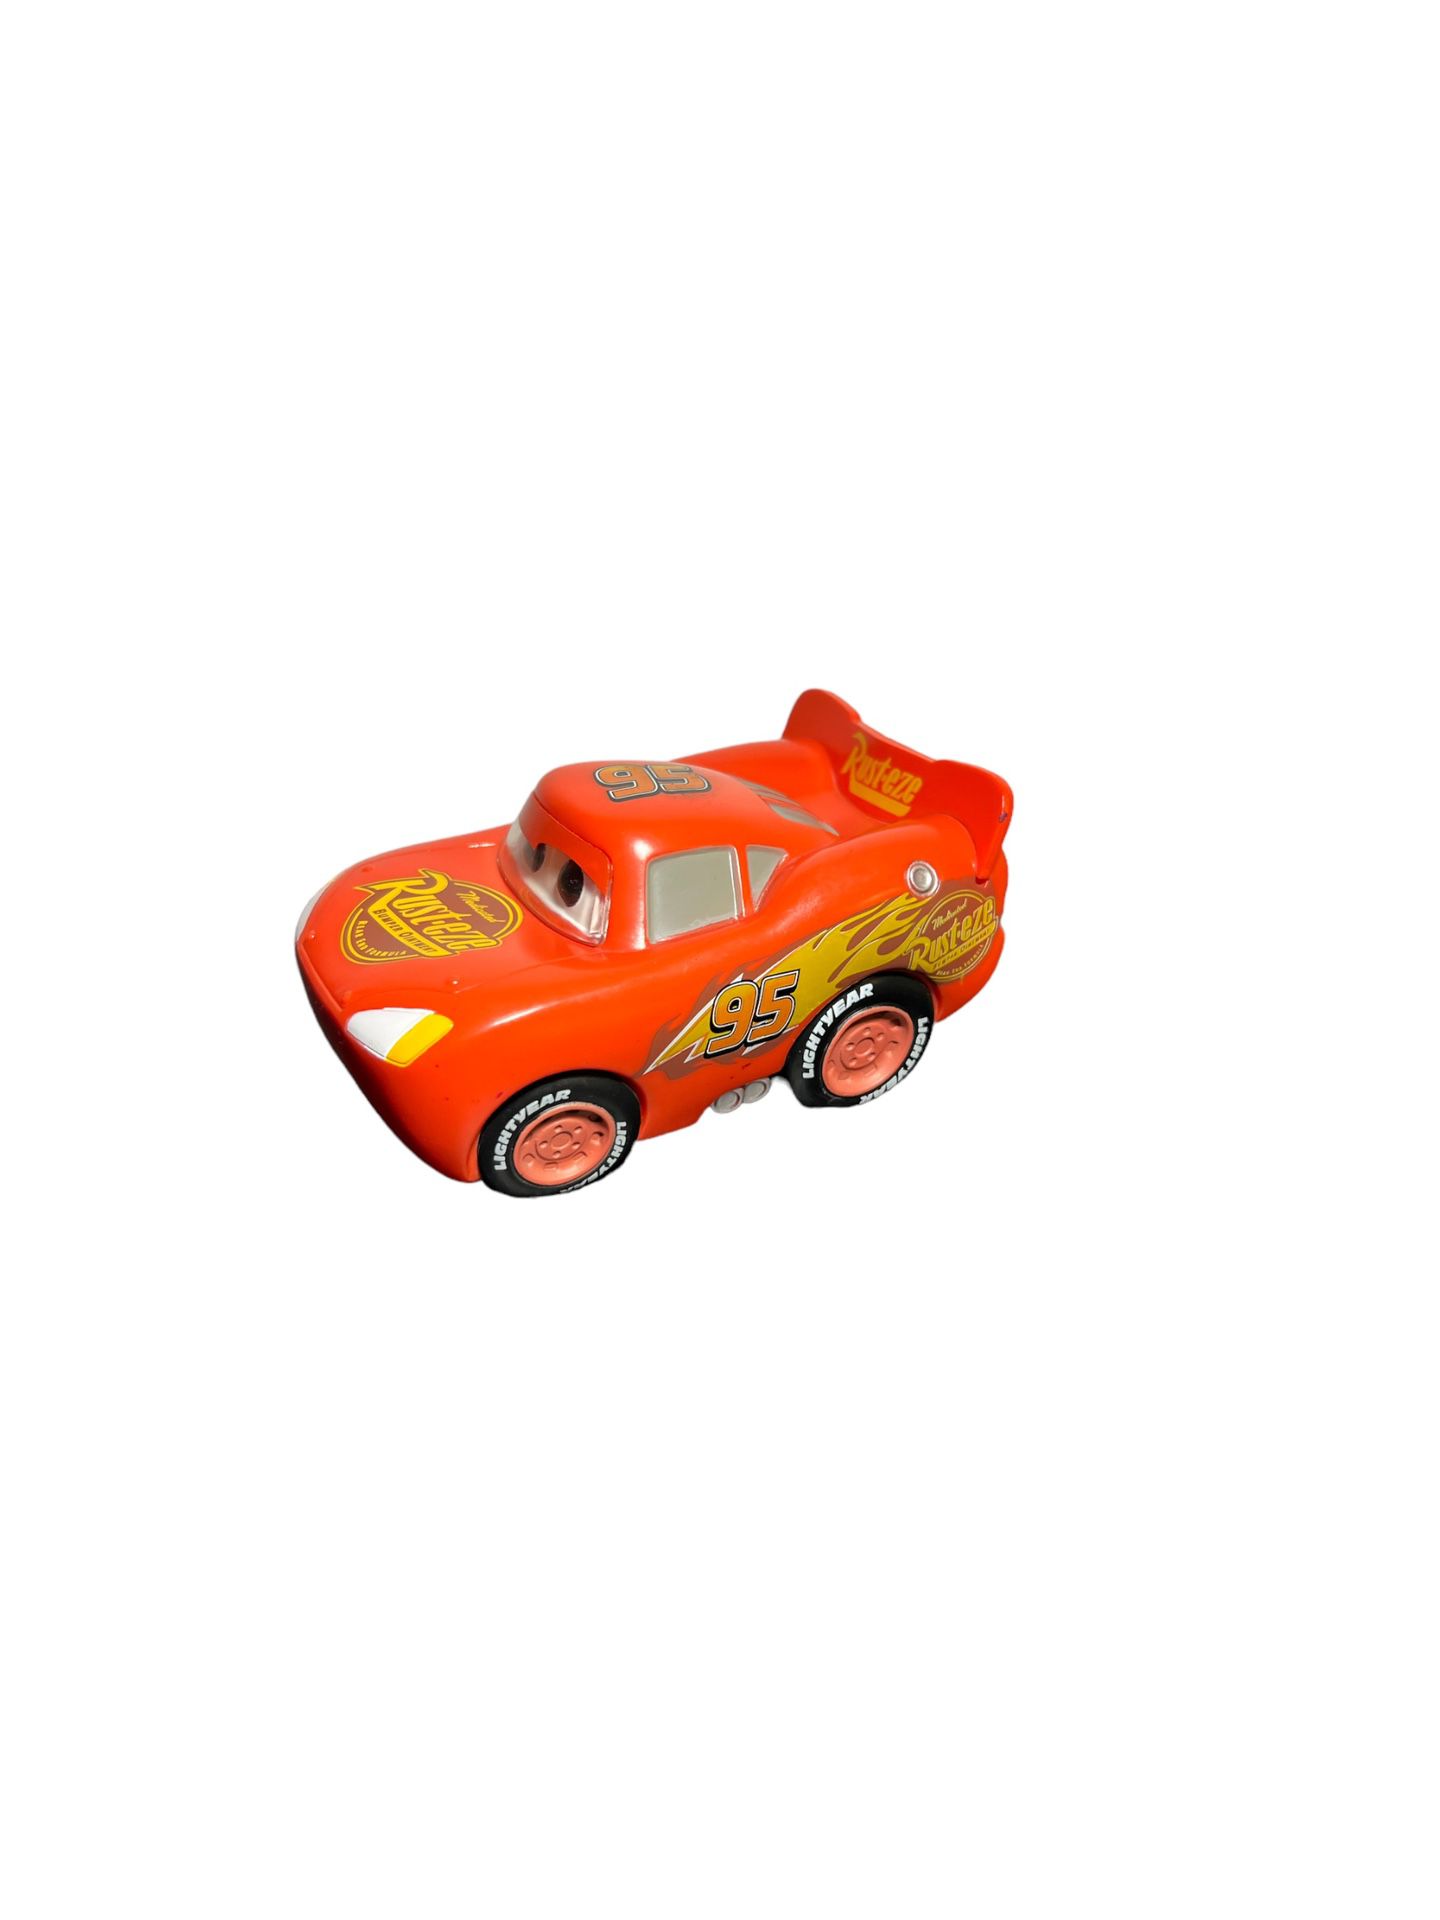 Funko Pop #282 Disney Pixar Cars 3 Lightning McQueen Figure